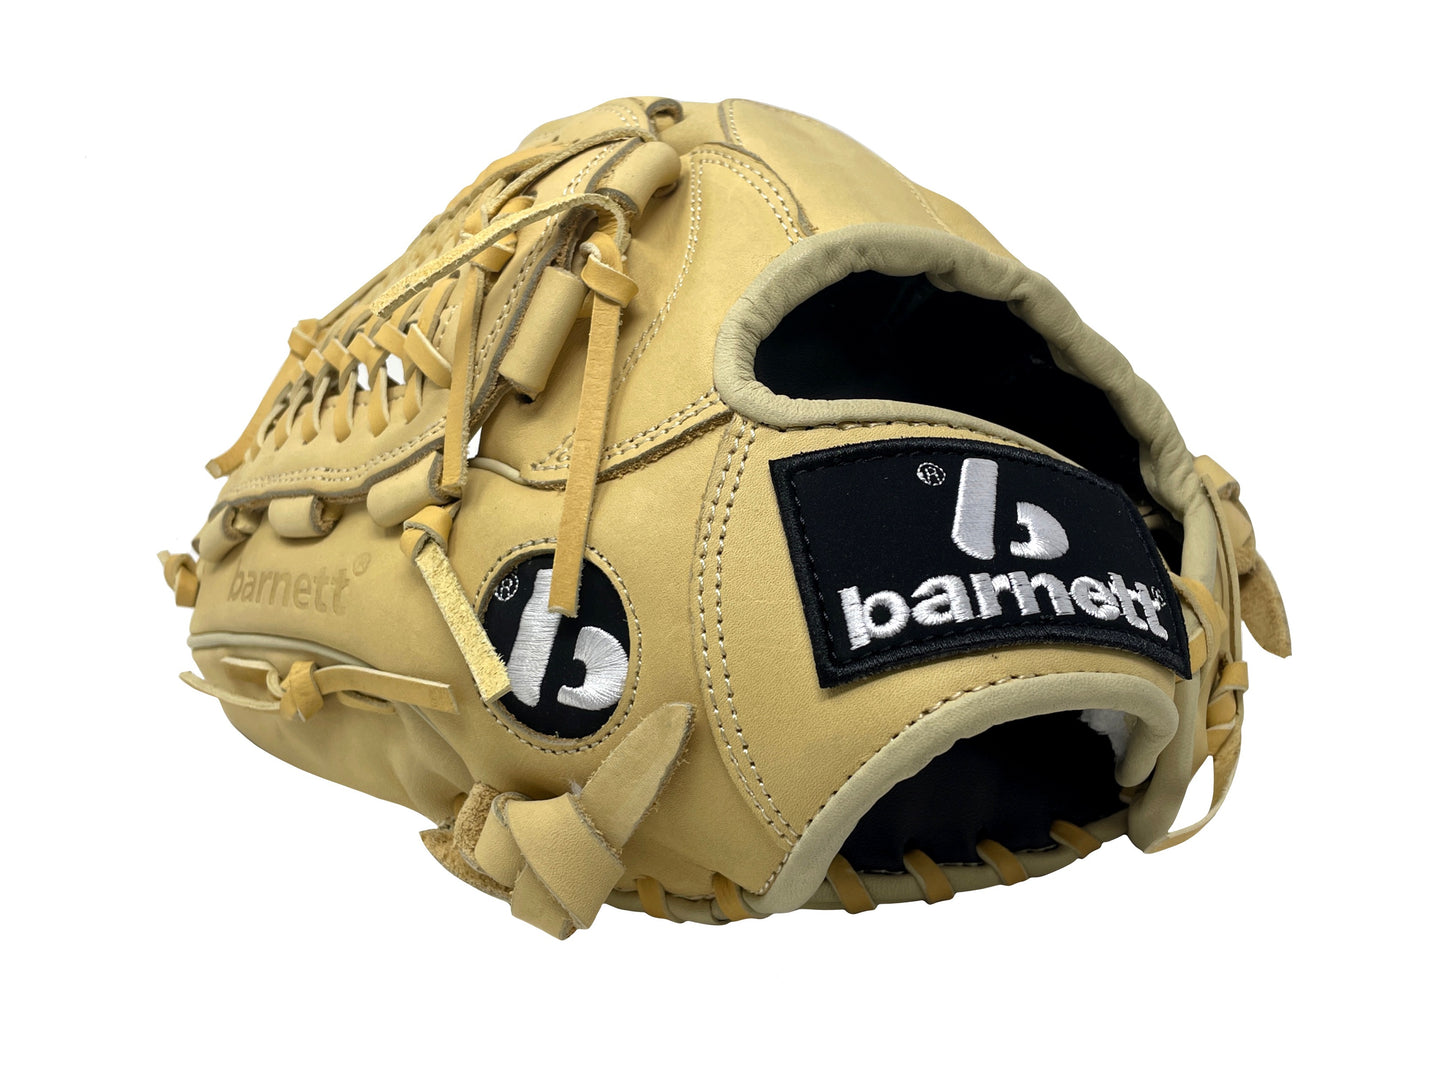 FL-125 hochwertiger Leder Baseballhandschuh Infield / Outfield / Pitcher, Beige